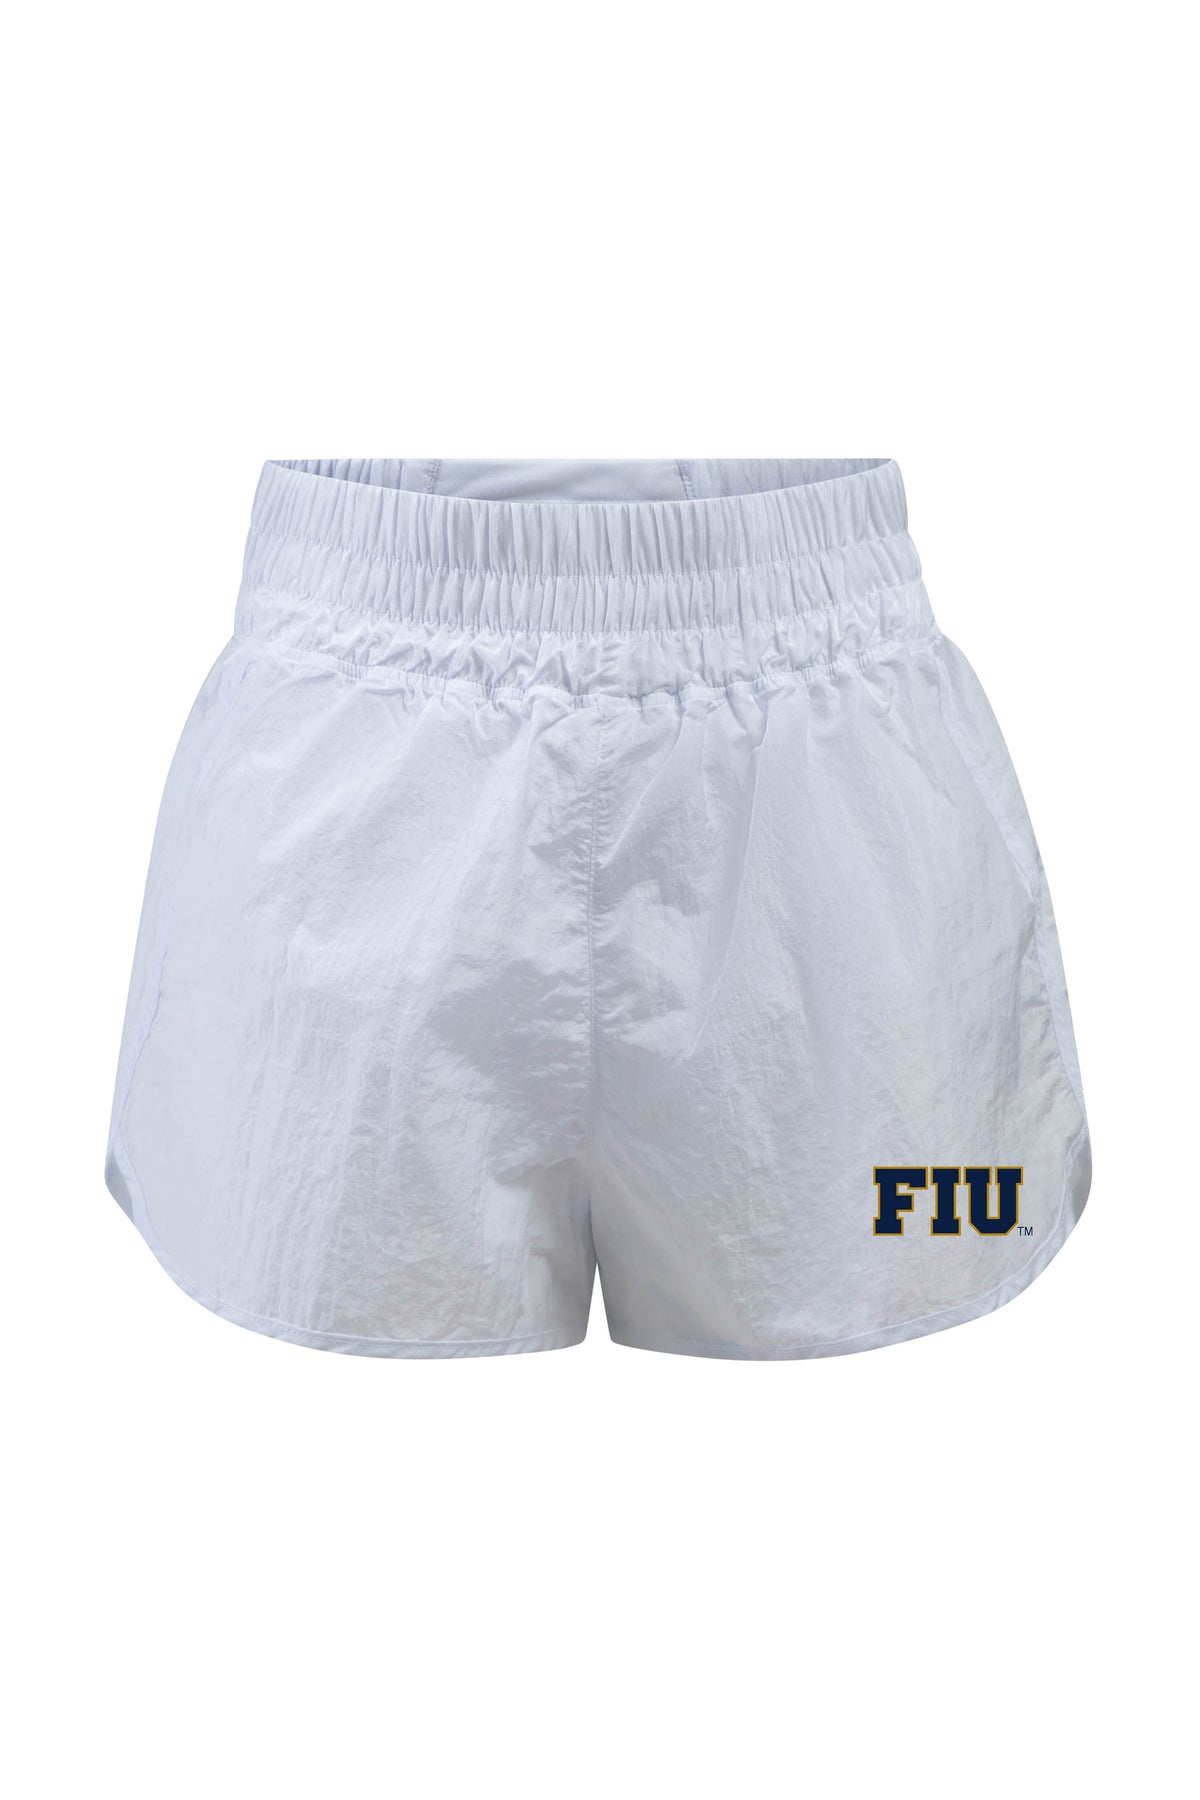 Florida International University Boxer Short